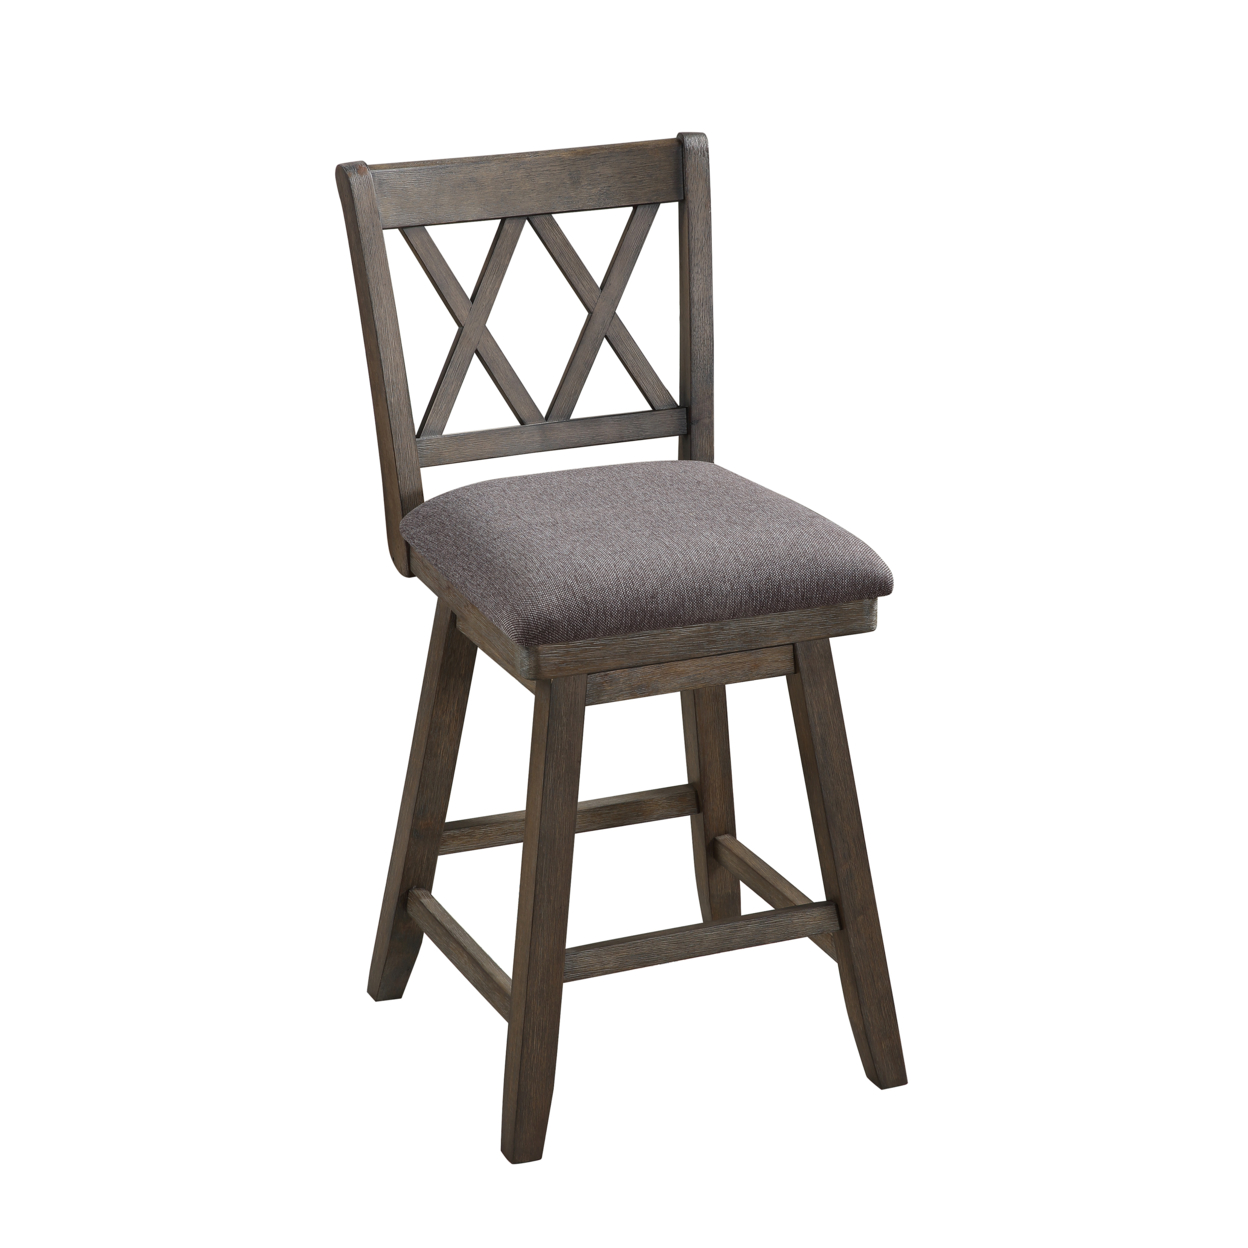 Jasmine 24 Handcrafted Rustic 360 Degree Swivel Counter Stool Chair, Distressed Walnut Brown, Gray Seat Cushion- Saltoro Sherpi